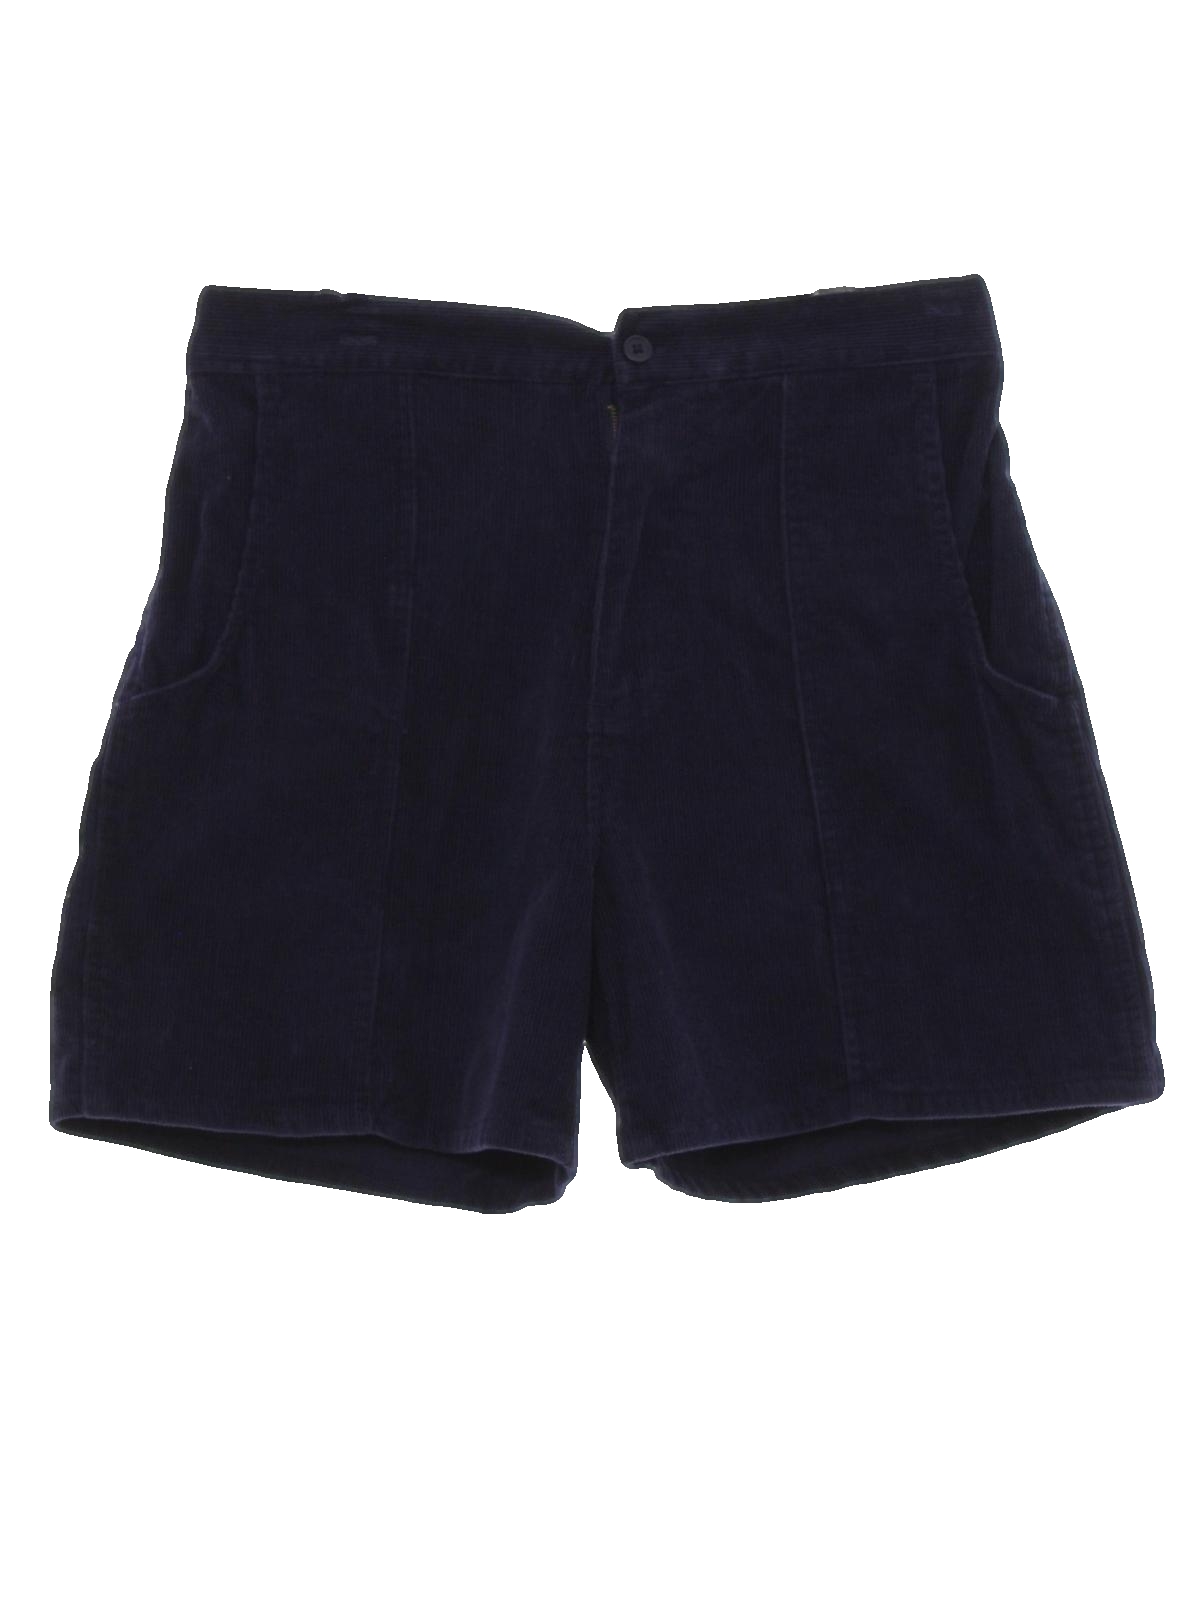 1990s Vintage Shorts: 90s -Windridge- Mens navy blue background cotton ...